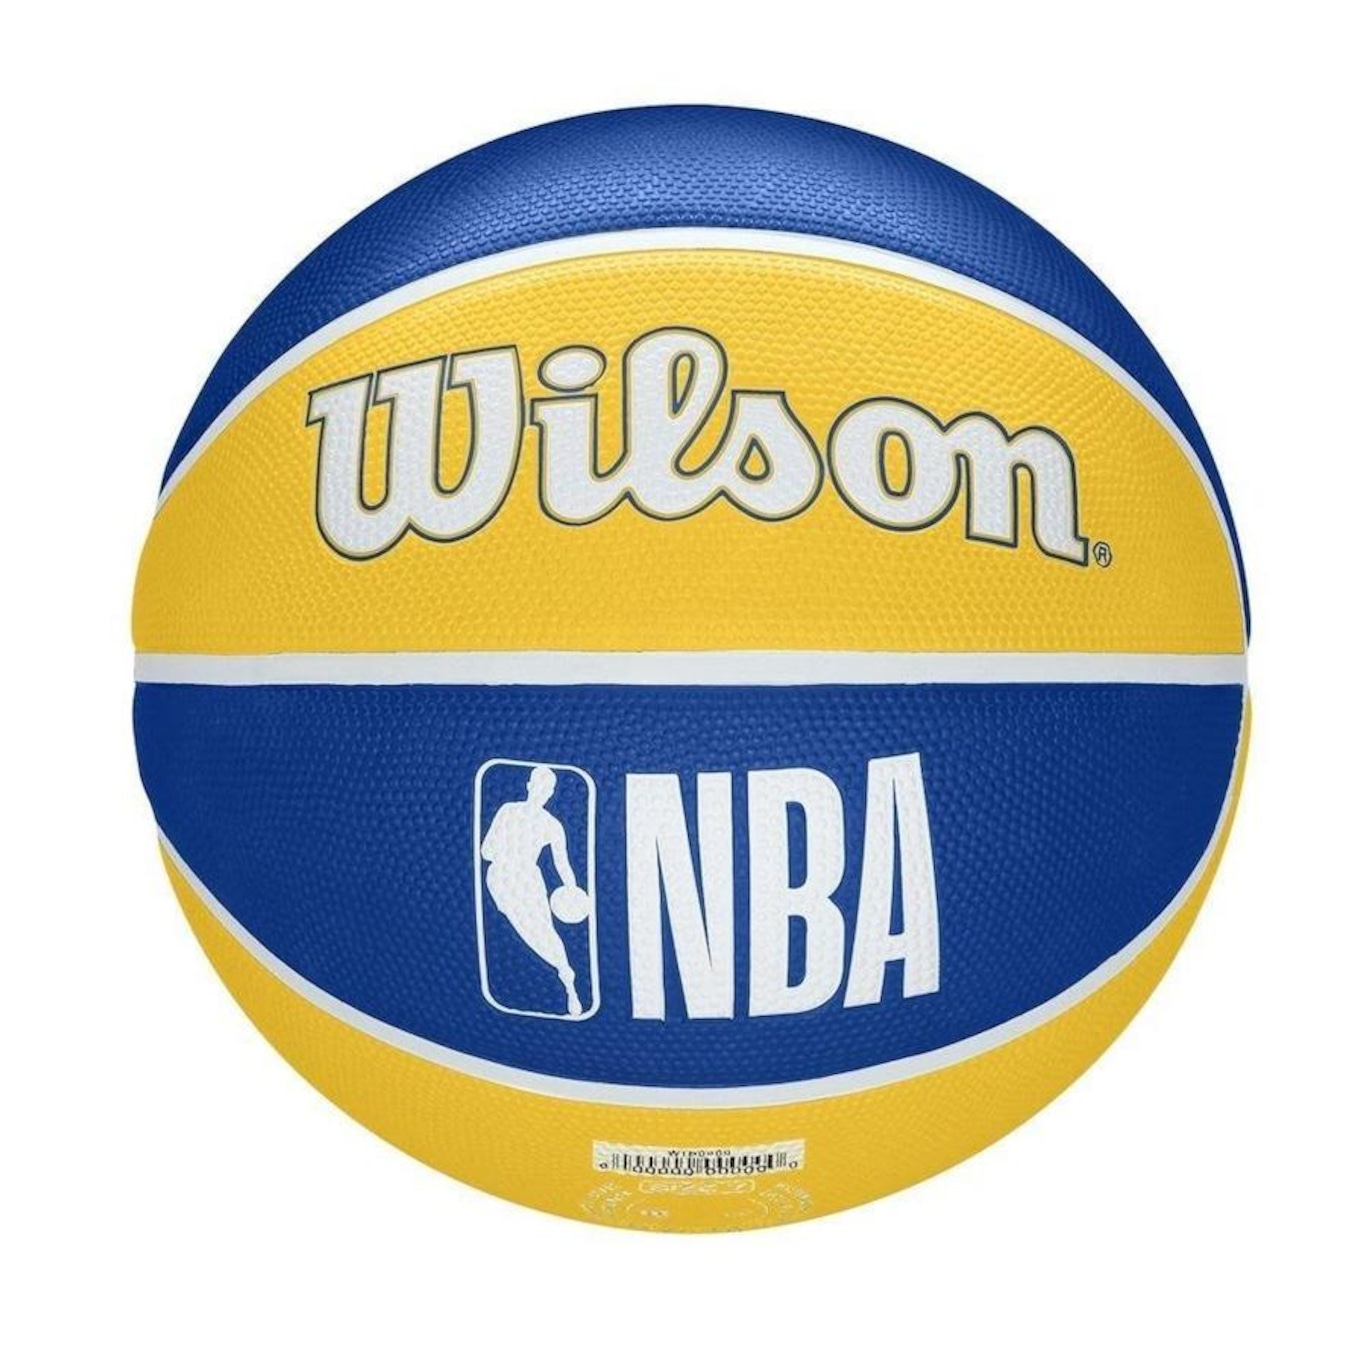 Bola de Basquete Wilson Golden State Warriors Team Tribute 7